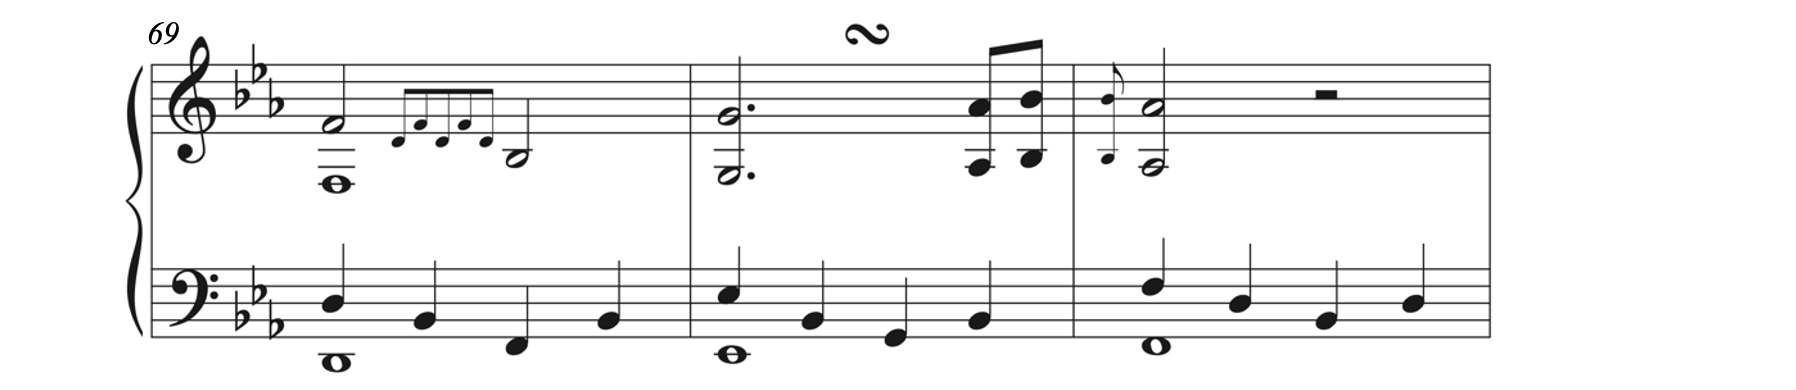 Montgeroult, Piece for Piano, Op. 3, first movement - Adagio non troppo